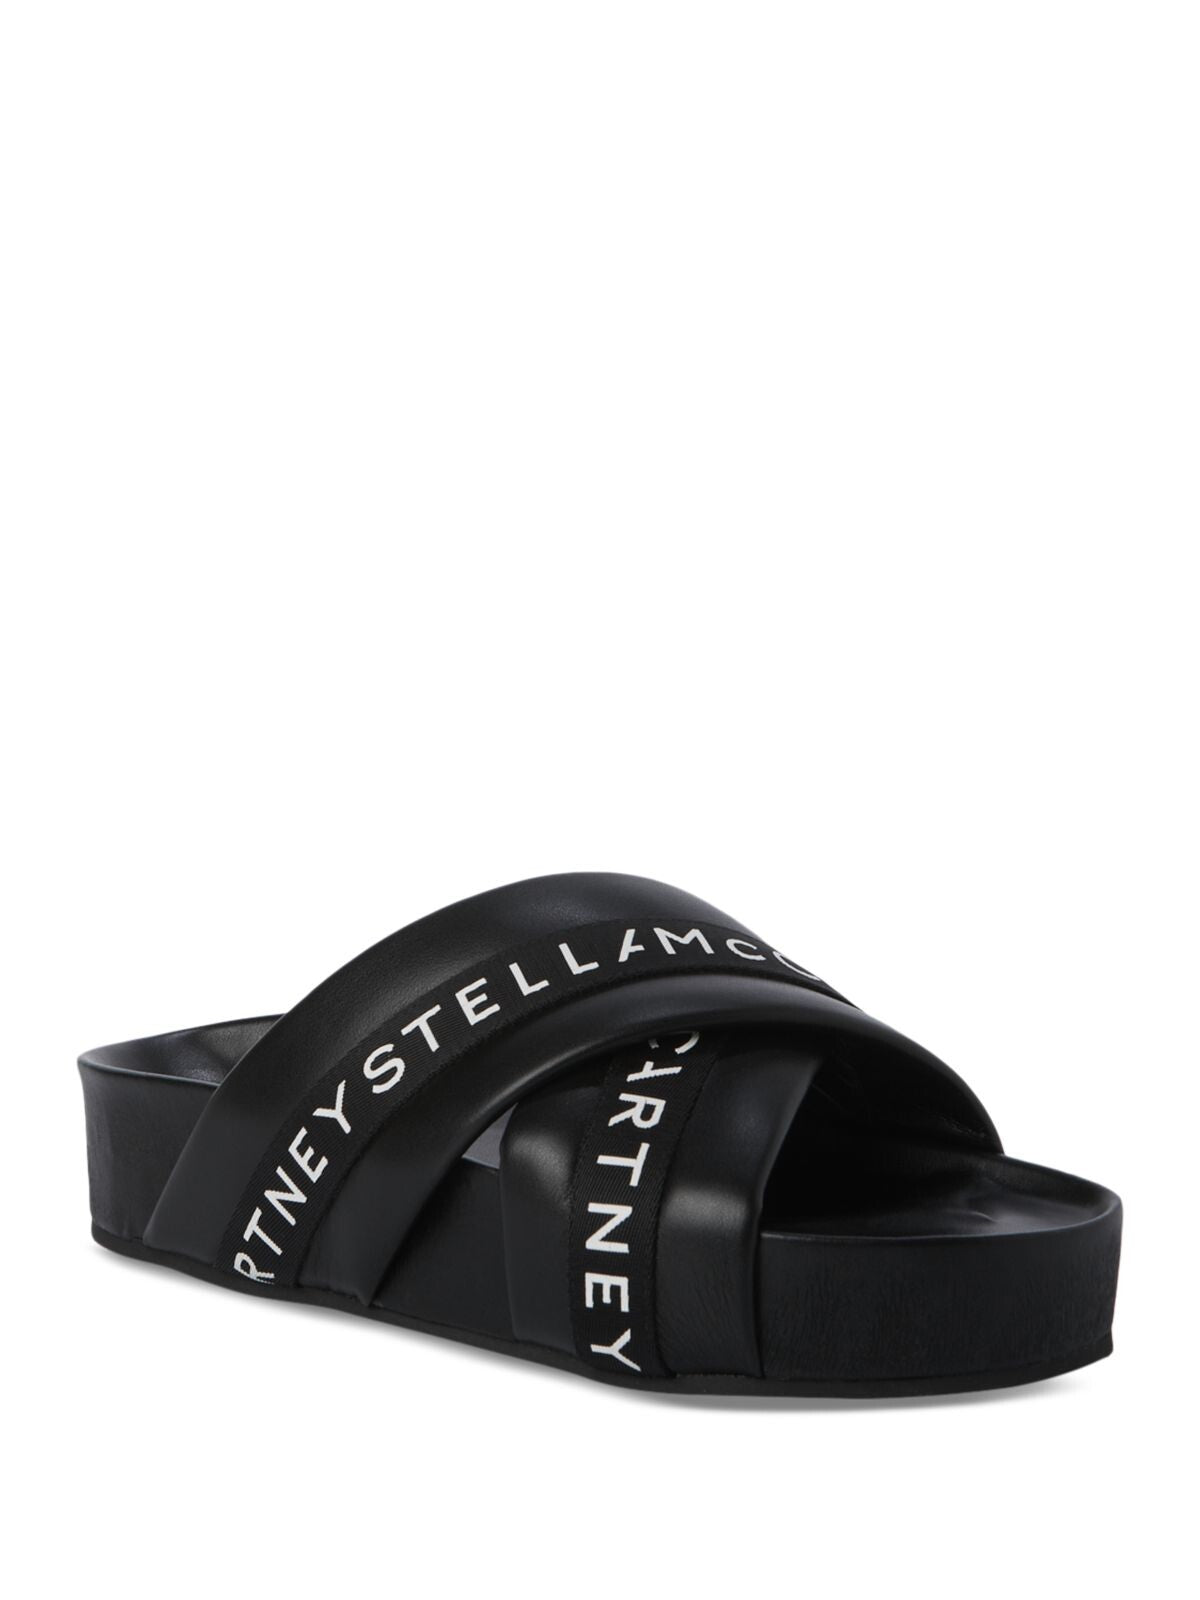 STELLAMCCARTNEY Womens Black Logo Comfort Vesta Round Toe Platform Slip On Slide Sandals Shoes 38